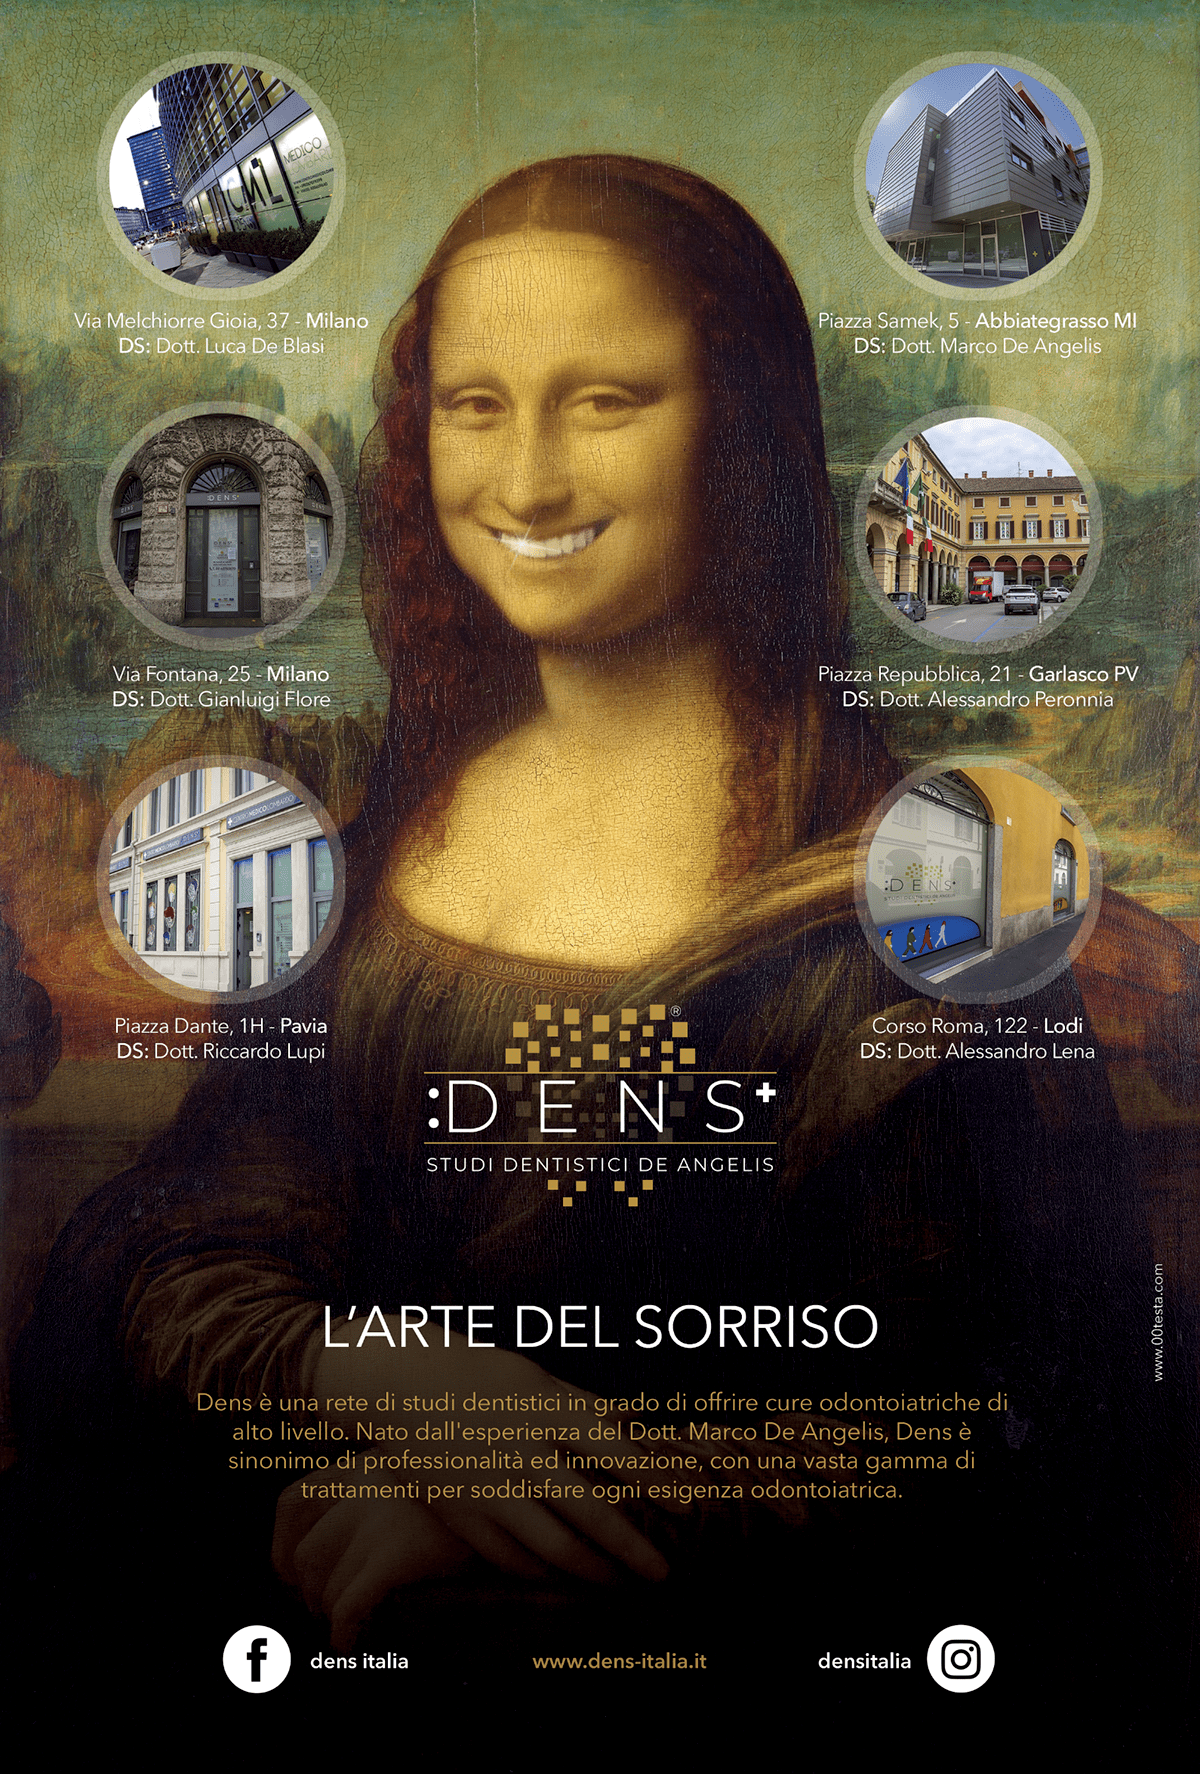 dentisti italia Leonardo monna lisa smile smiling sorriso